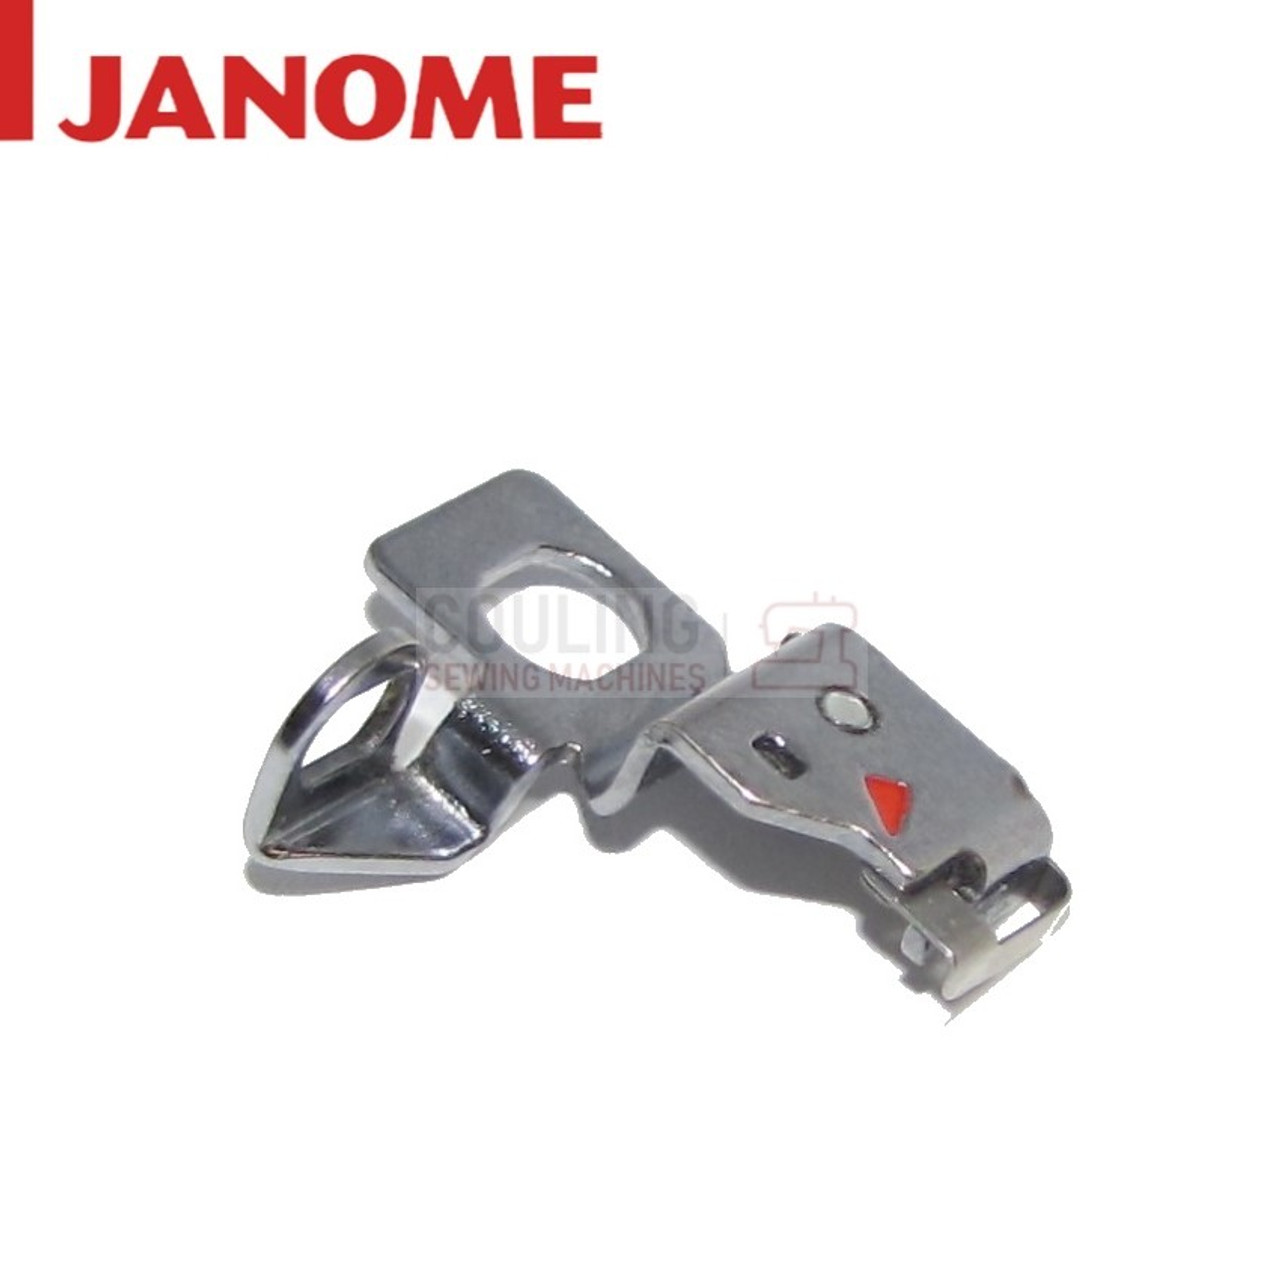 Janome Bobbin Case standard top loading holder unit 3627569106